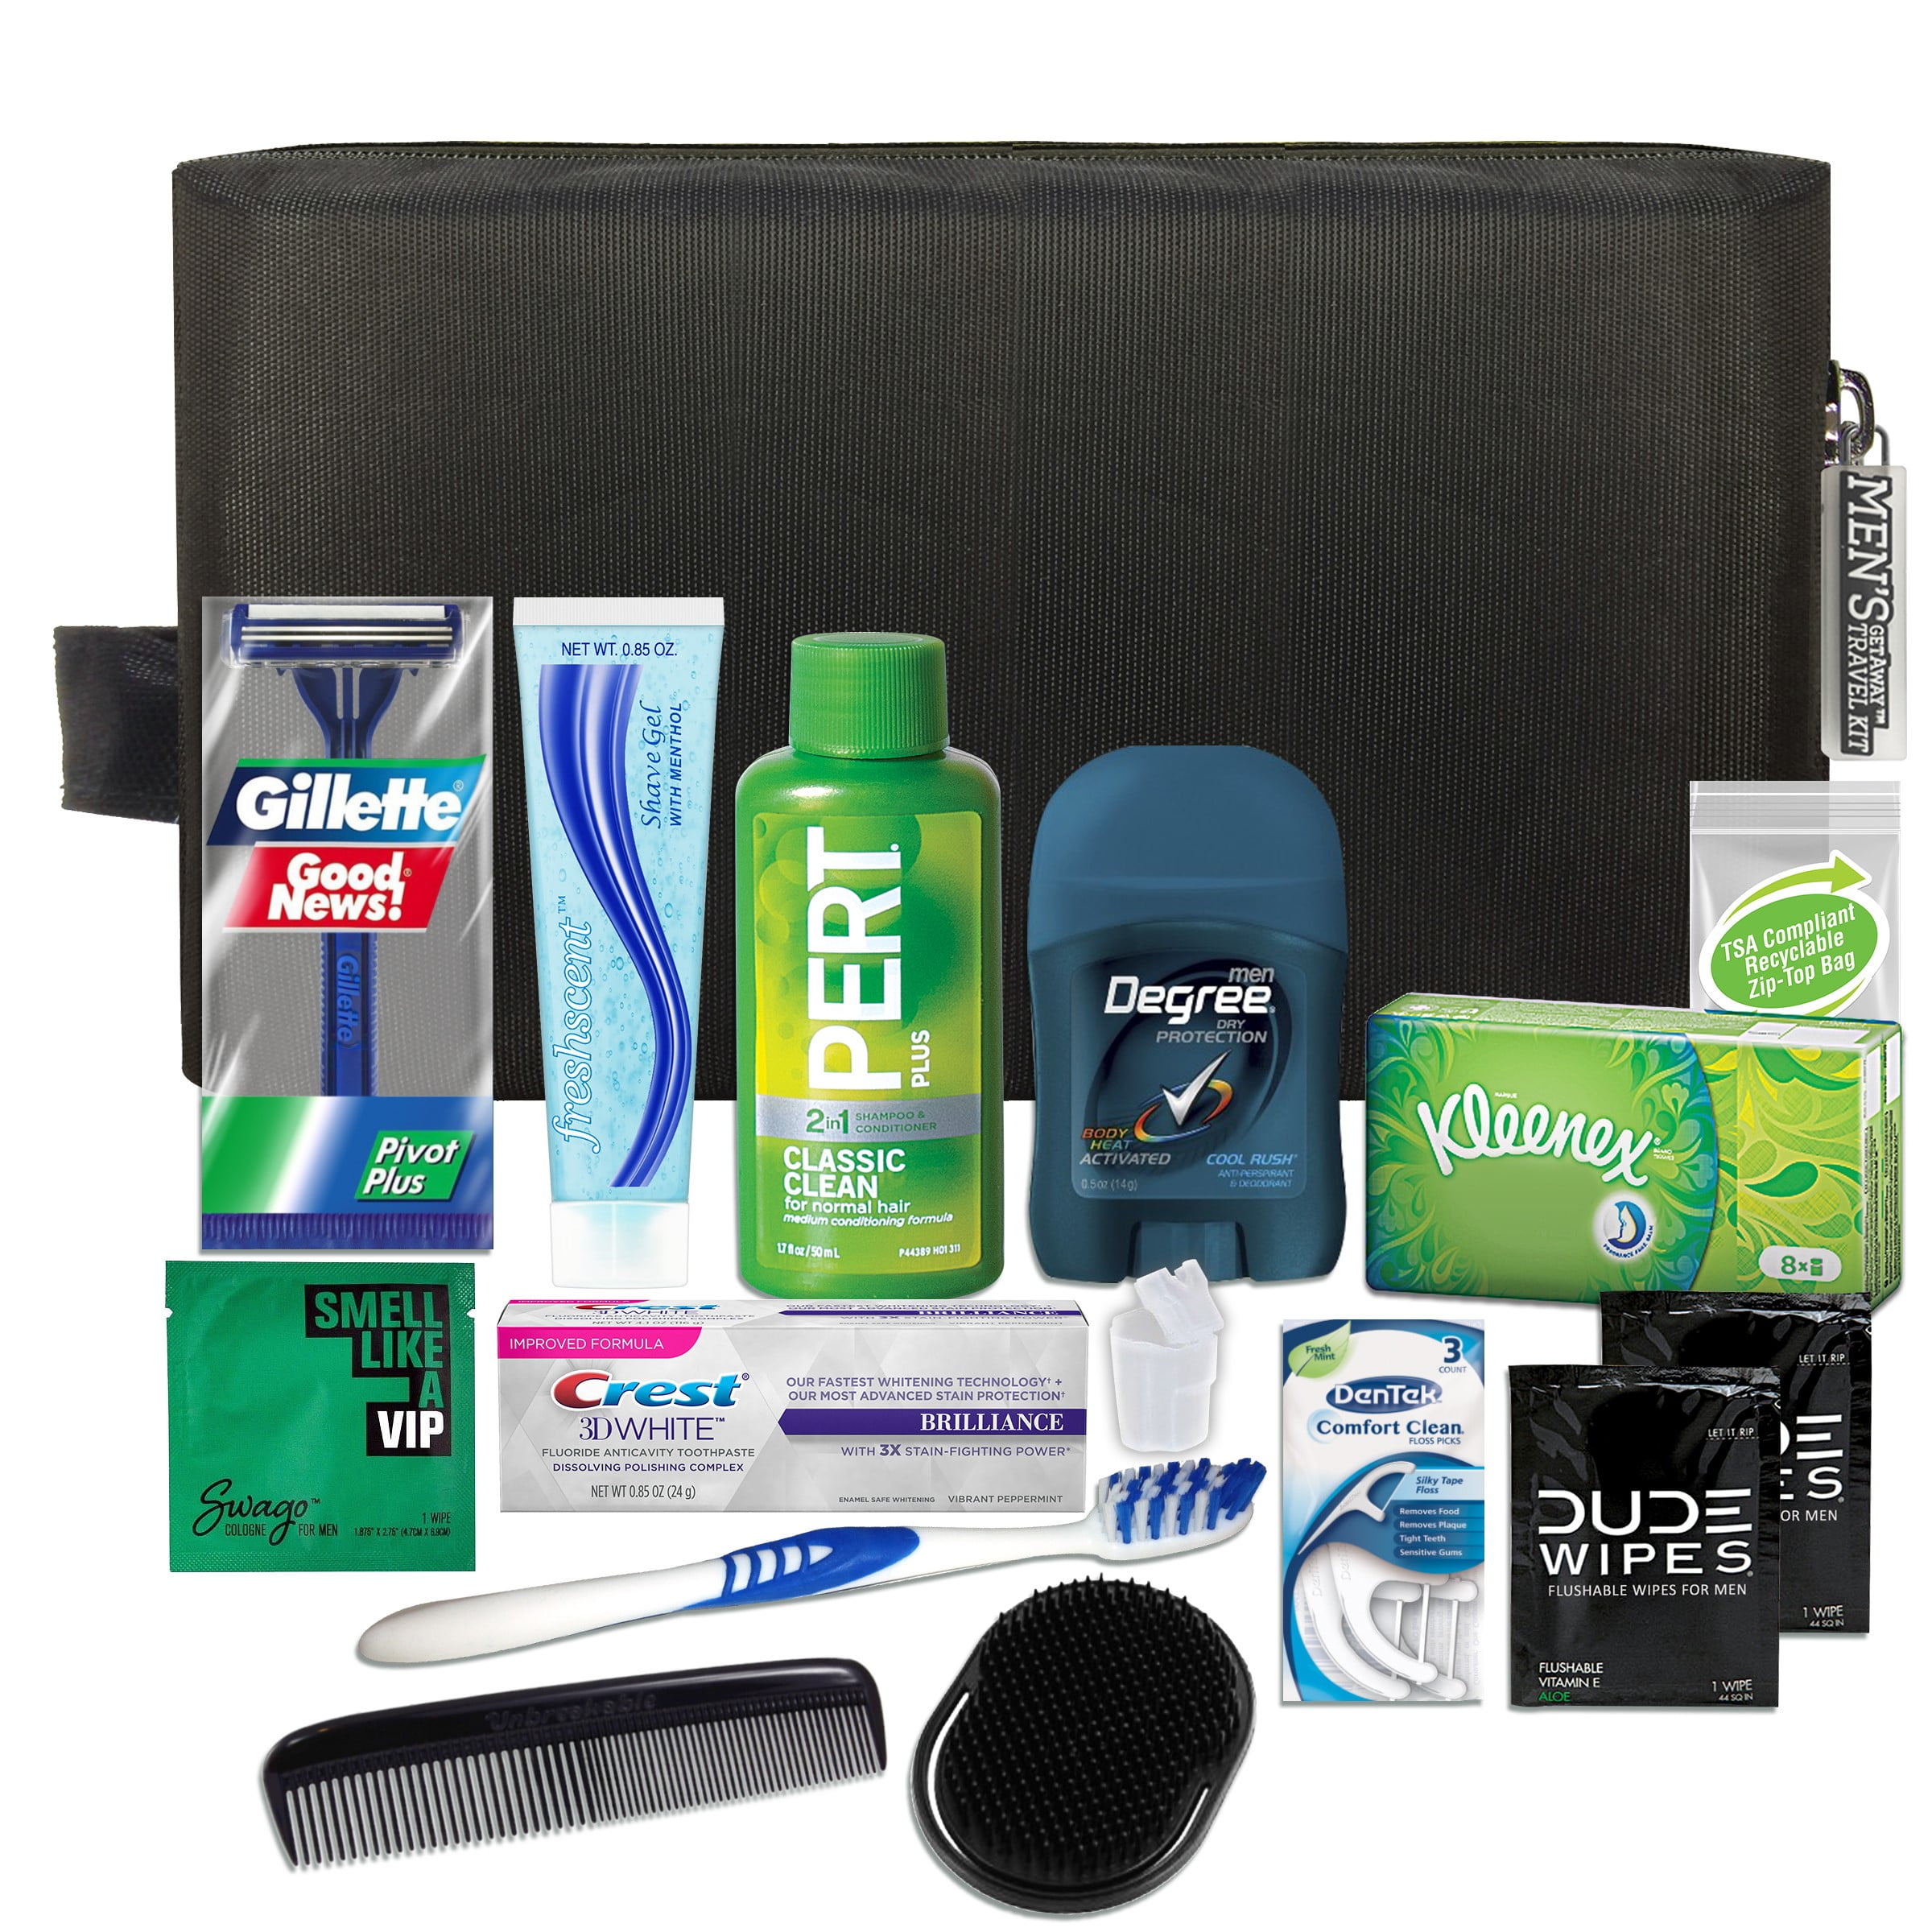 Convenience Kits International Men's Premium 15 Piece Travel Kit in Reusable Toiletry Zippered Bag, TSA Compliant, Featuring Men's Essentials, Blue